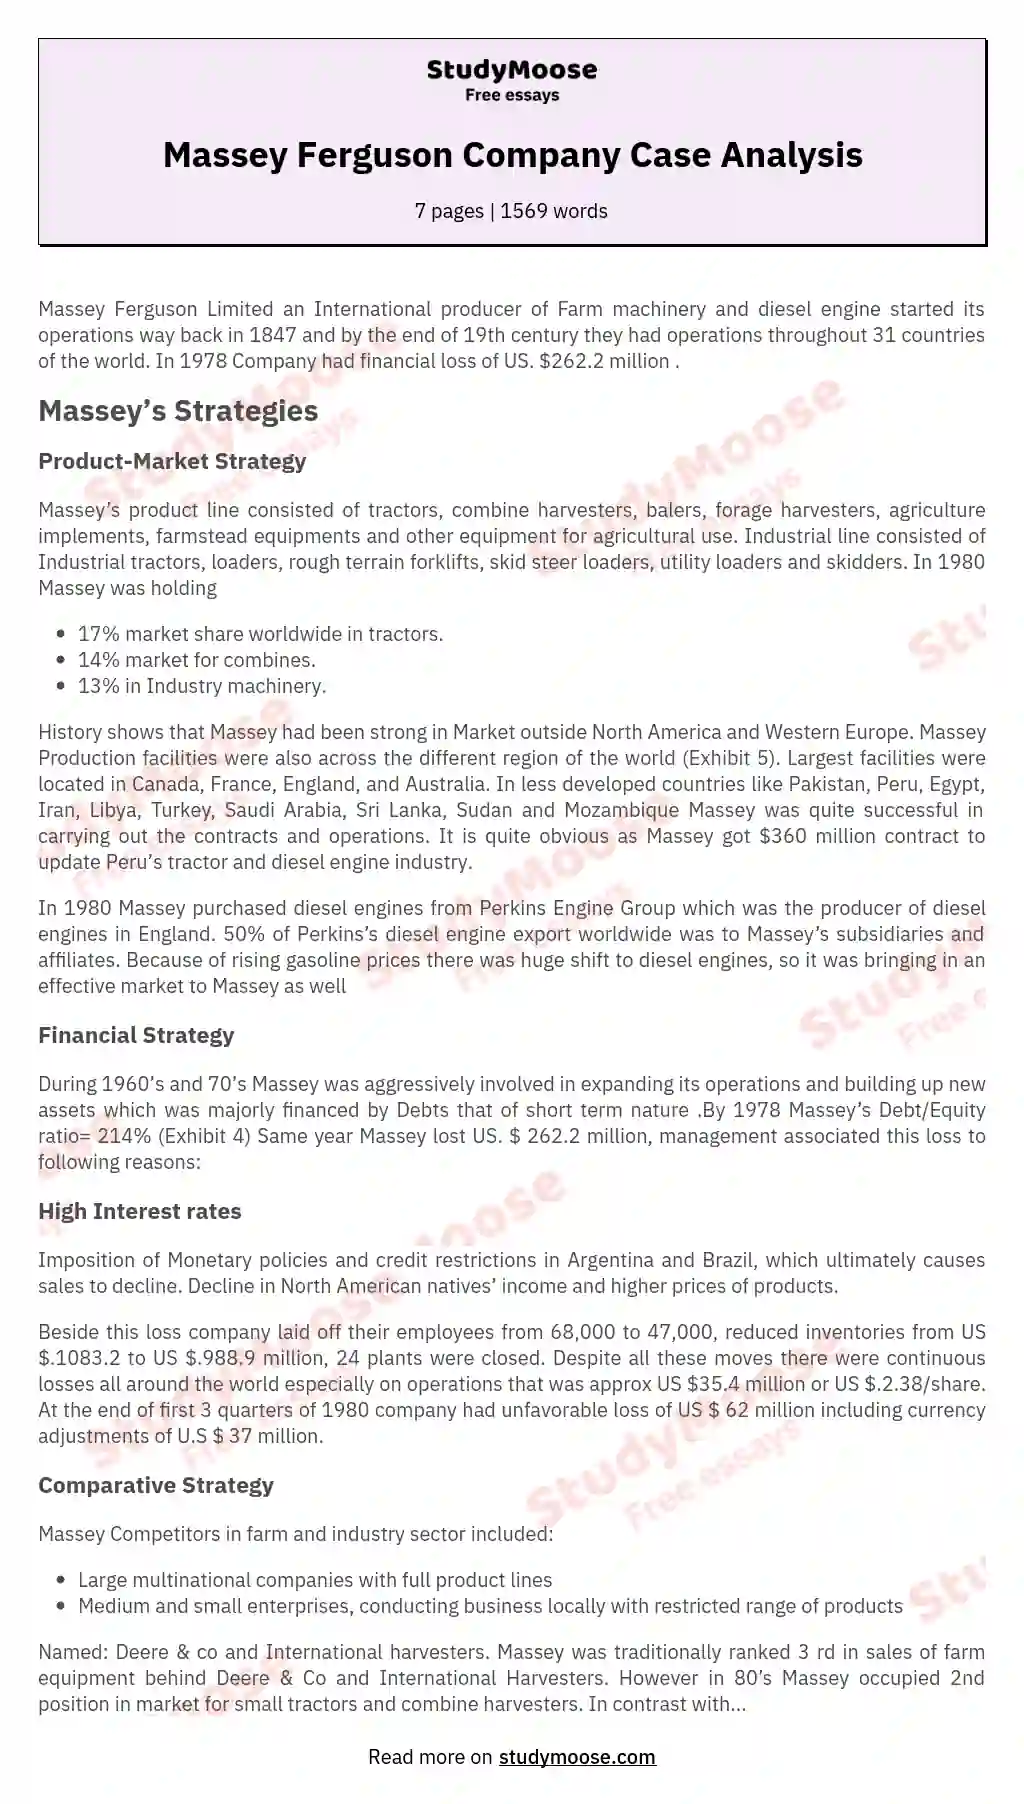 Massey Ferguson Company Case Analysis essay